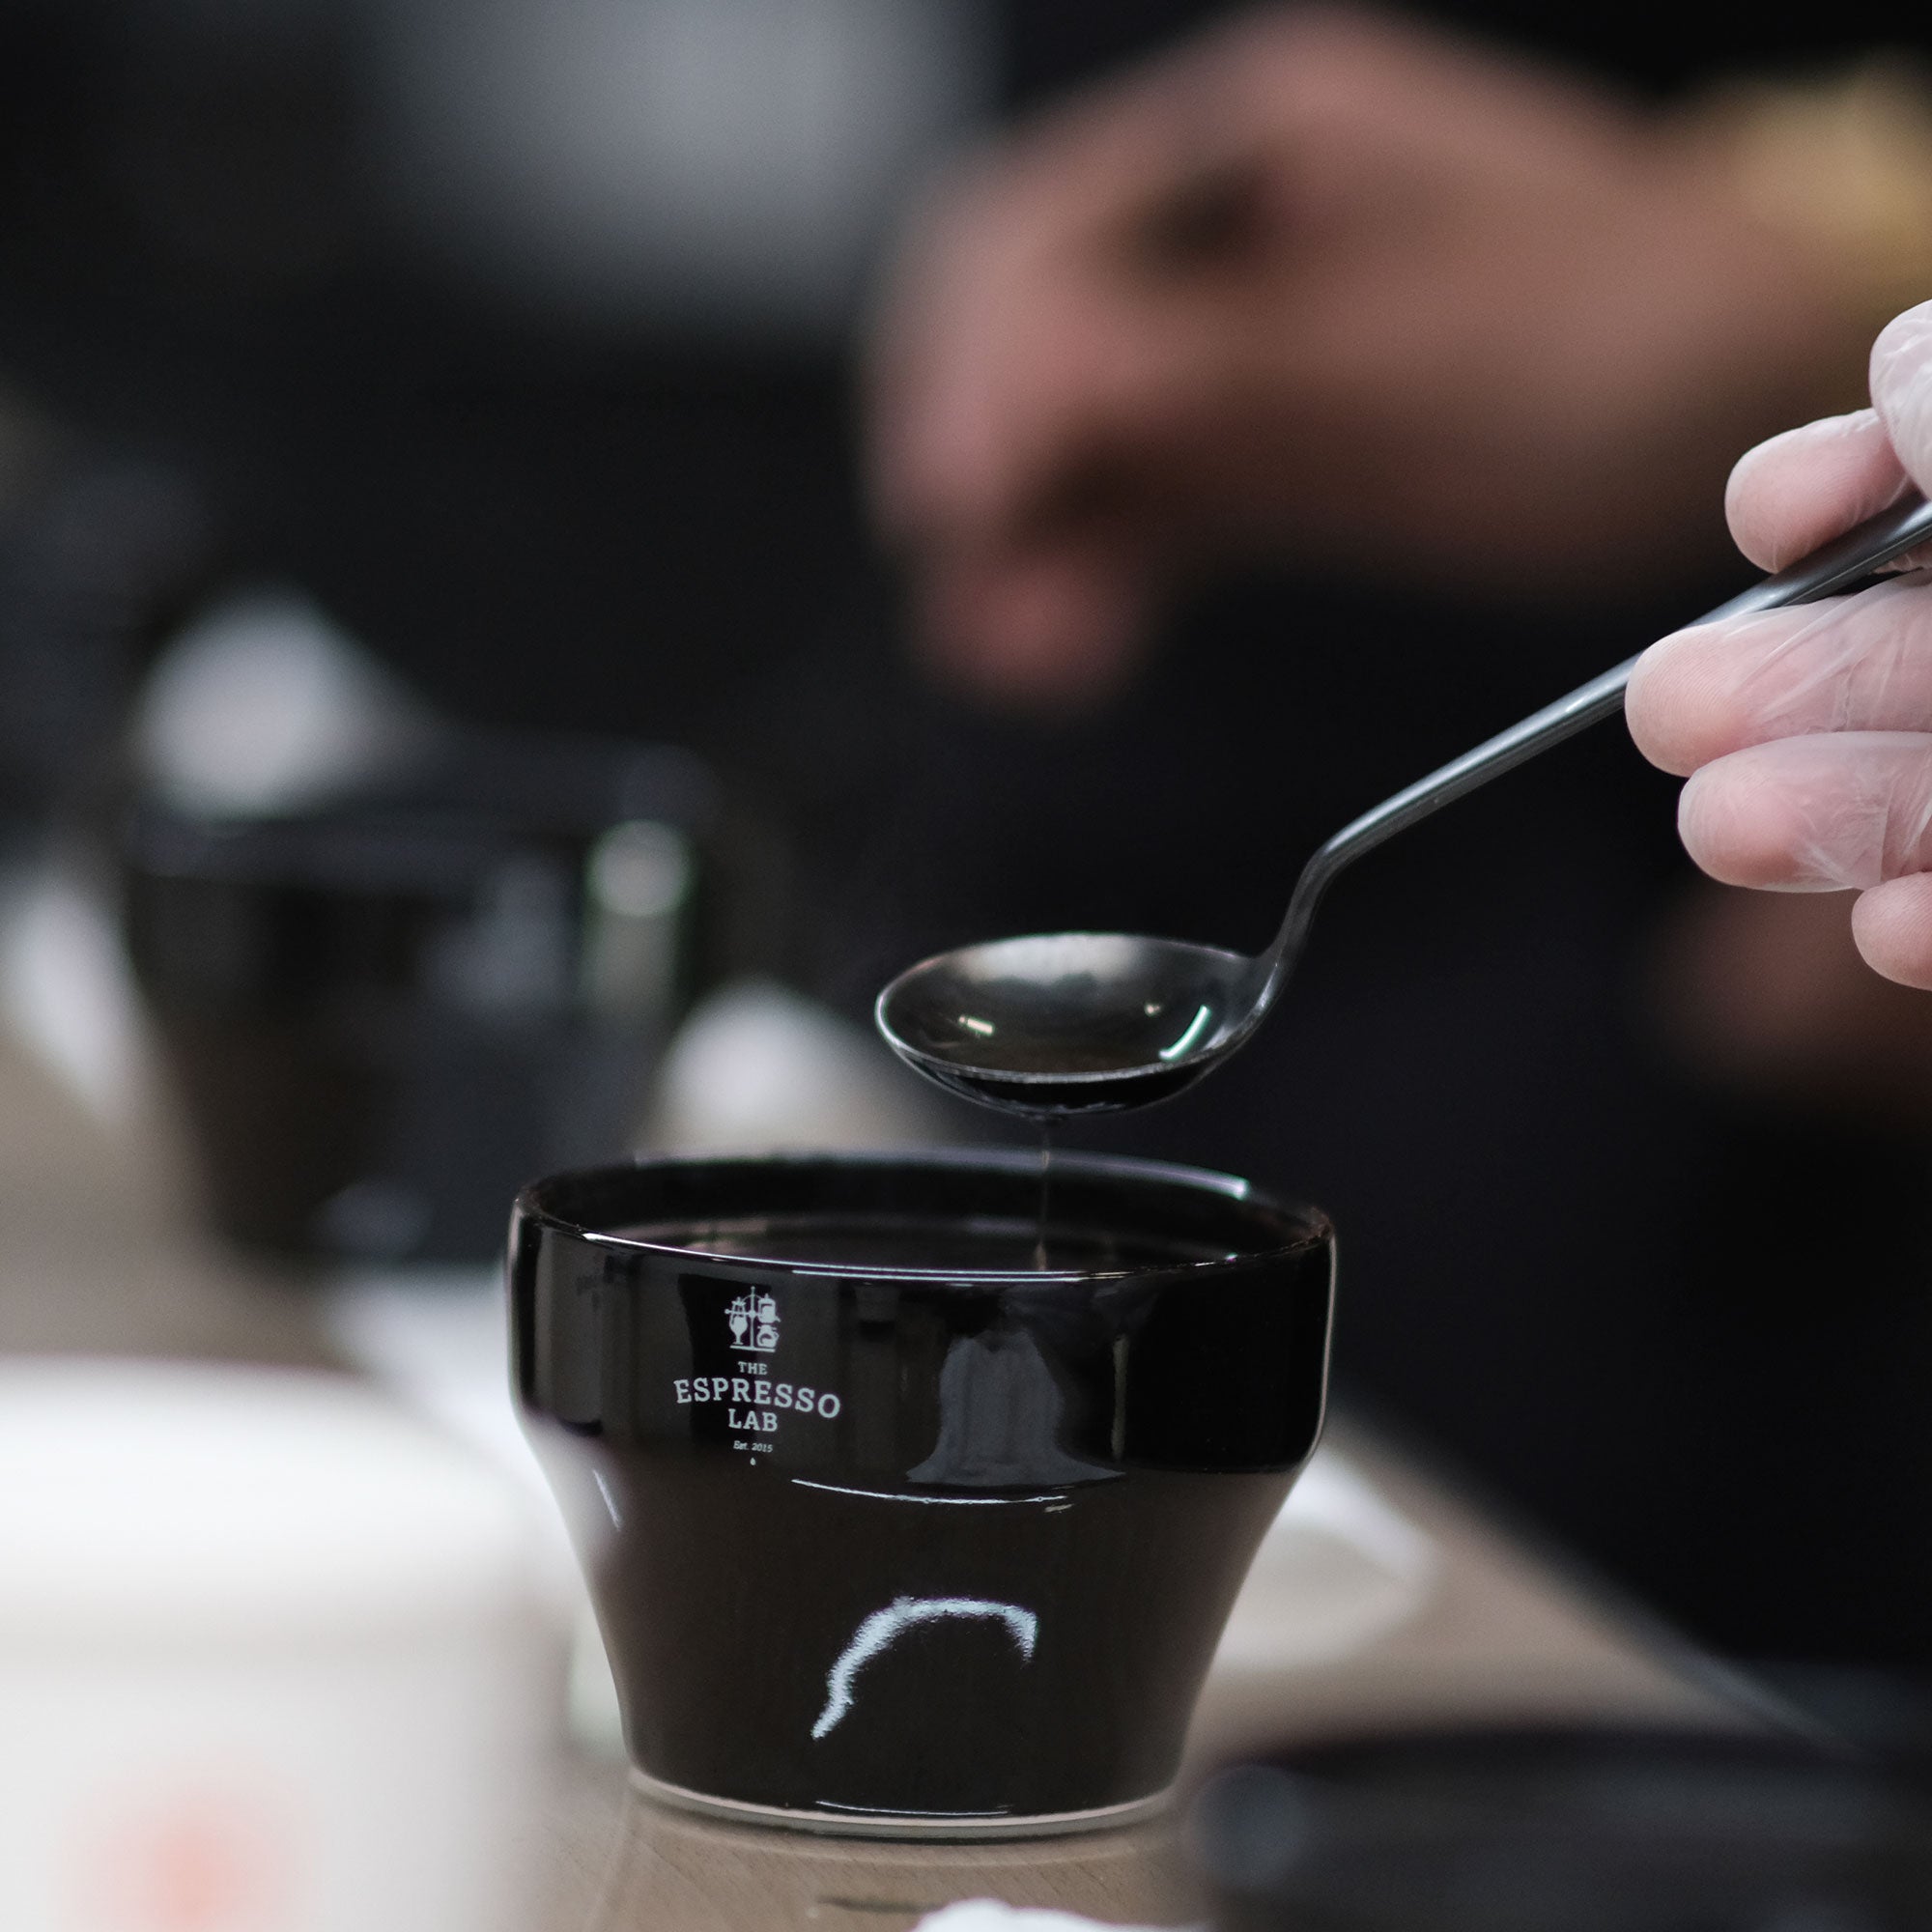 Hario Cupping Spoon Tetsu Kasuya Model photographed at The Espresso Lab Roastery